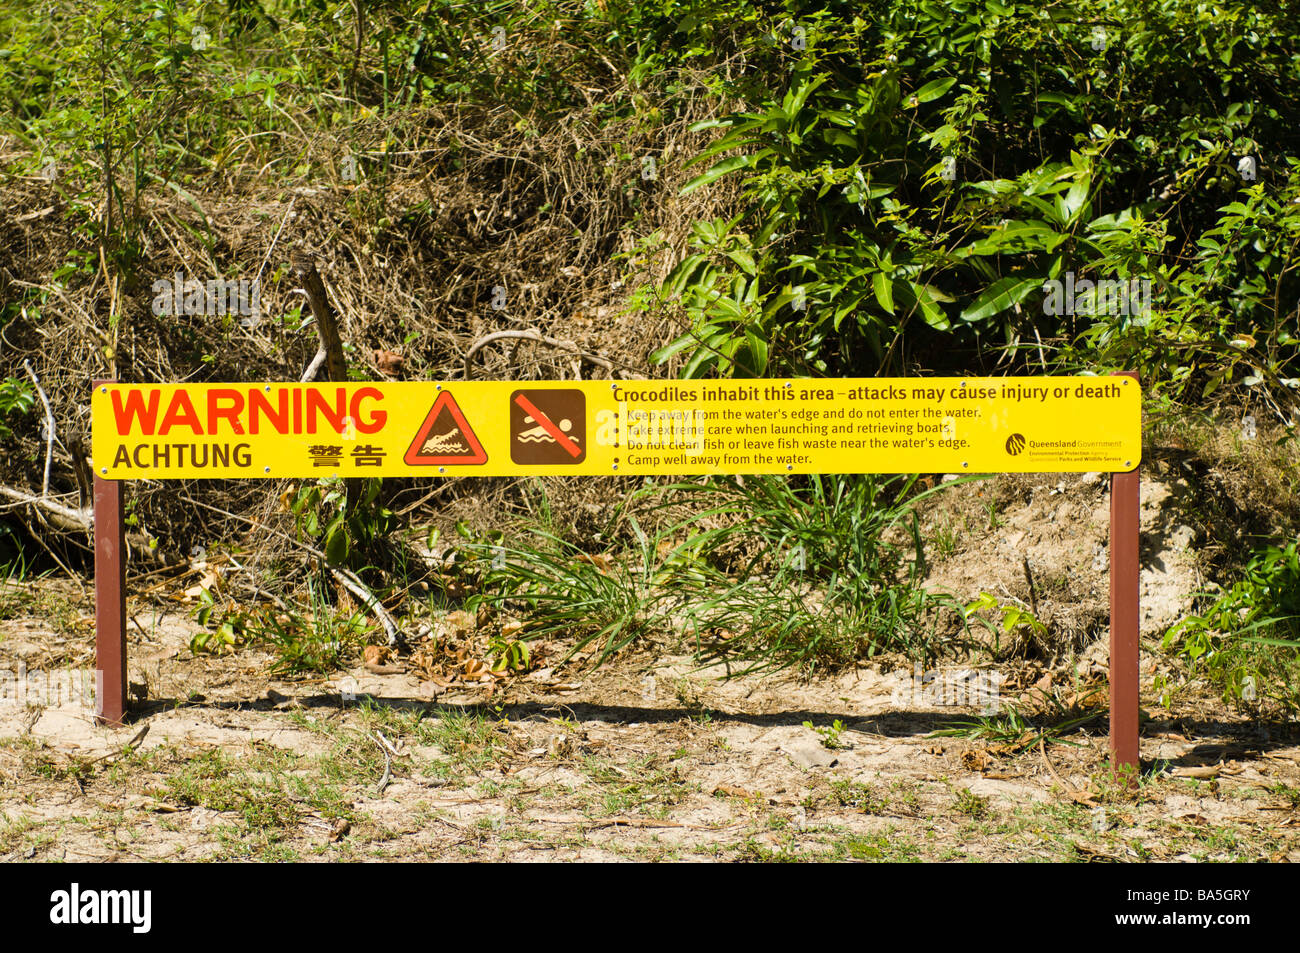 Crocodile warning sign on the beach at Port Douglas Stock Photo